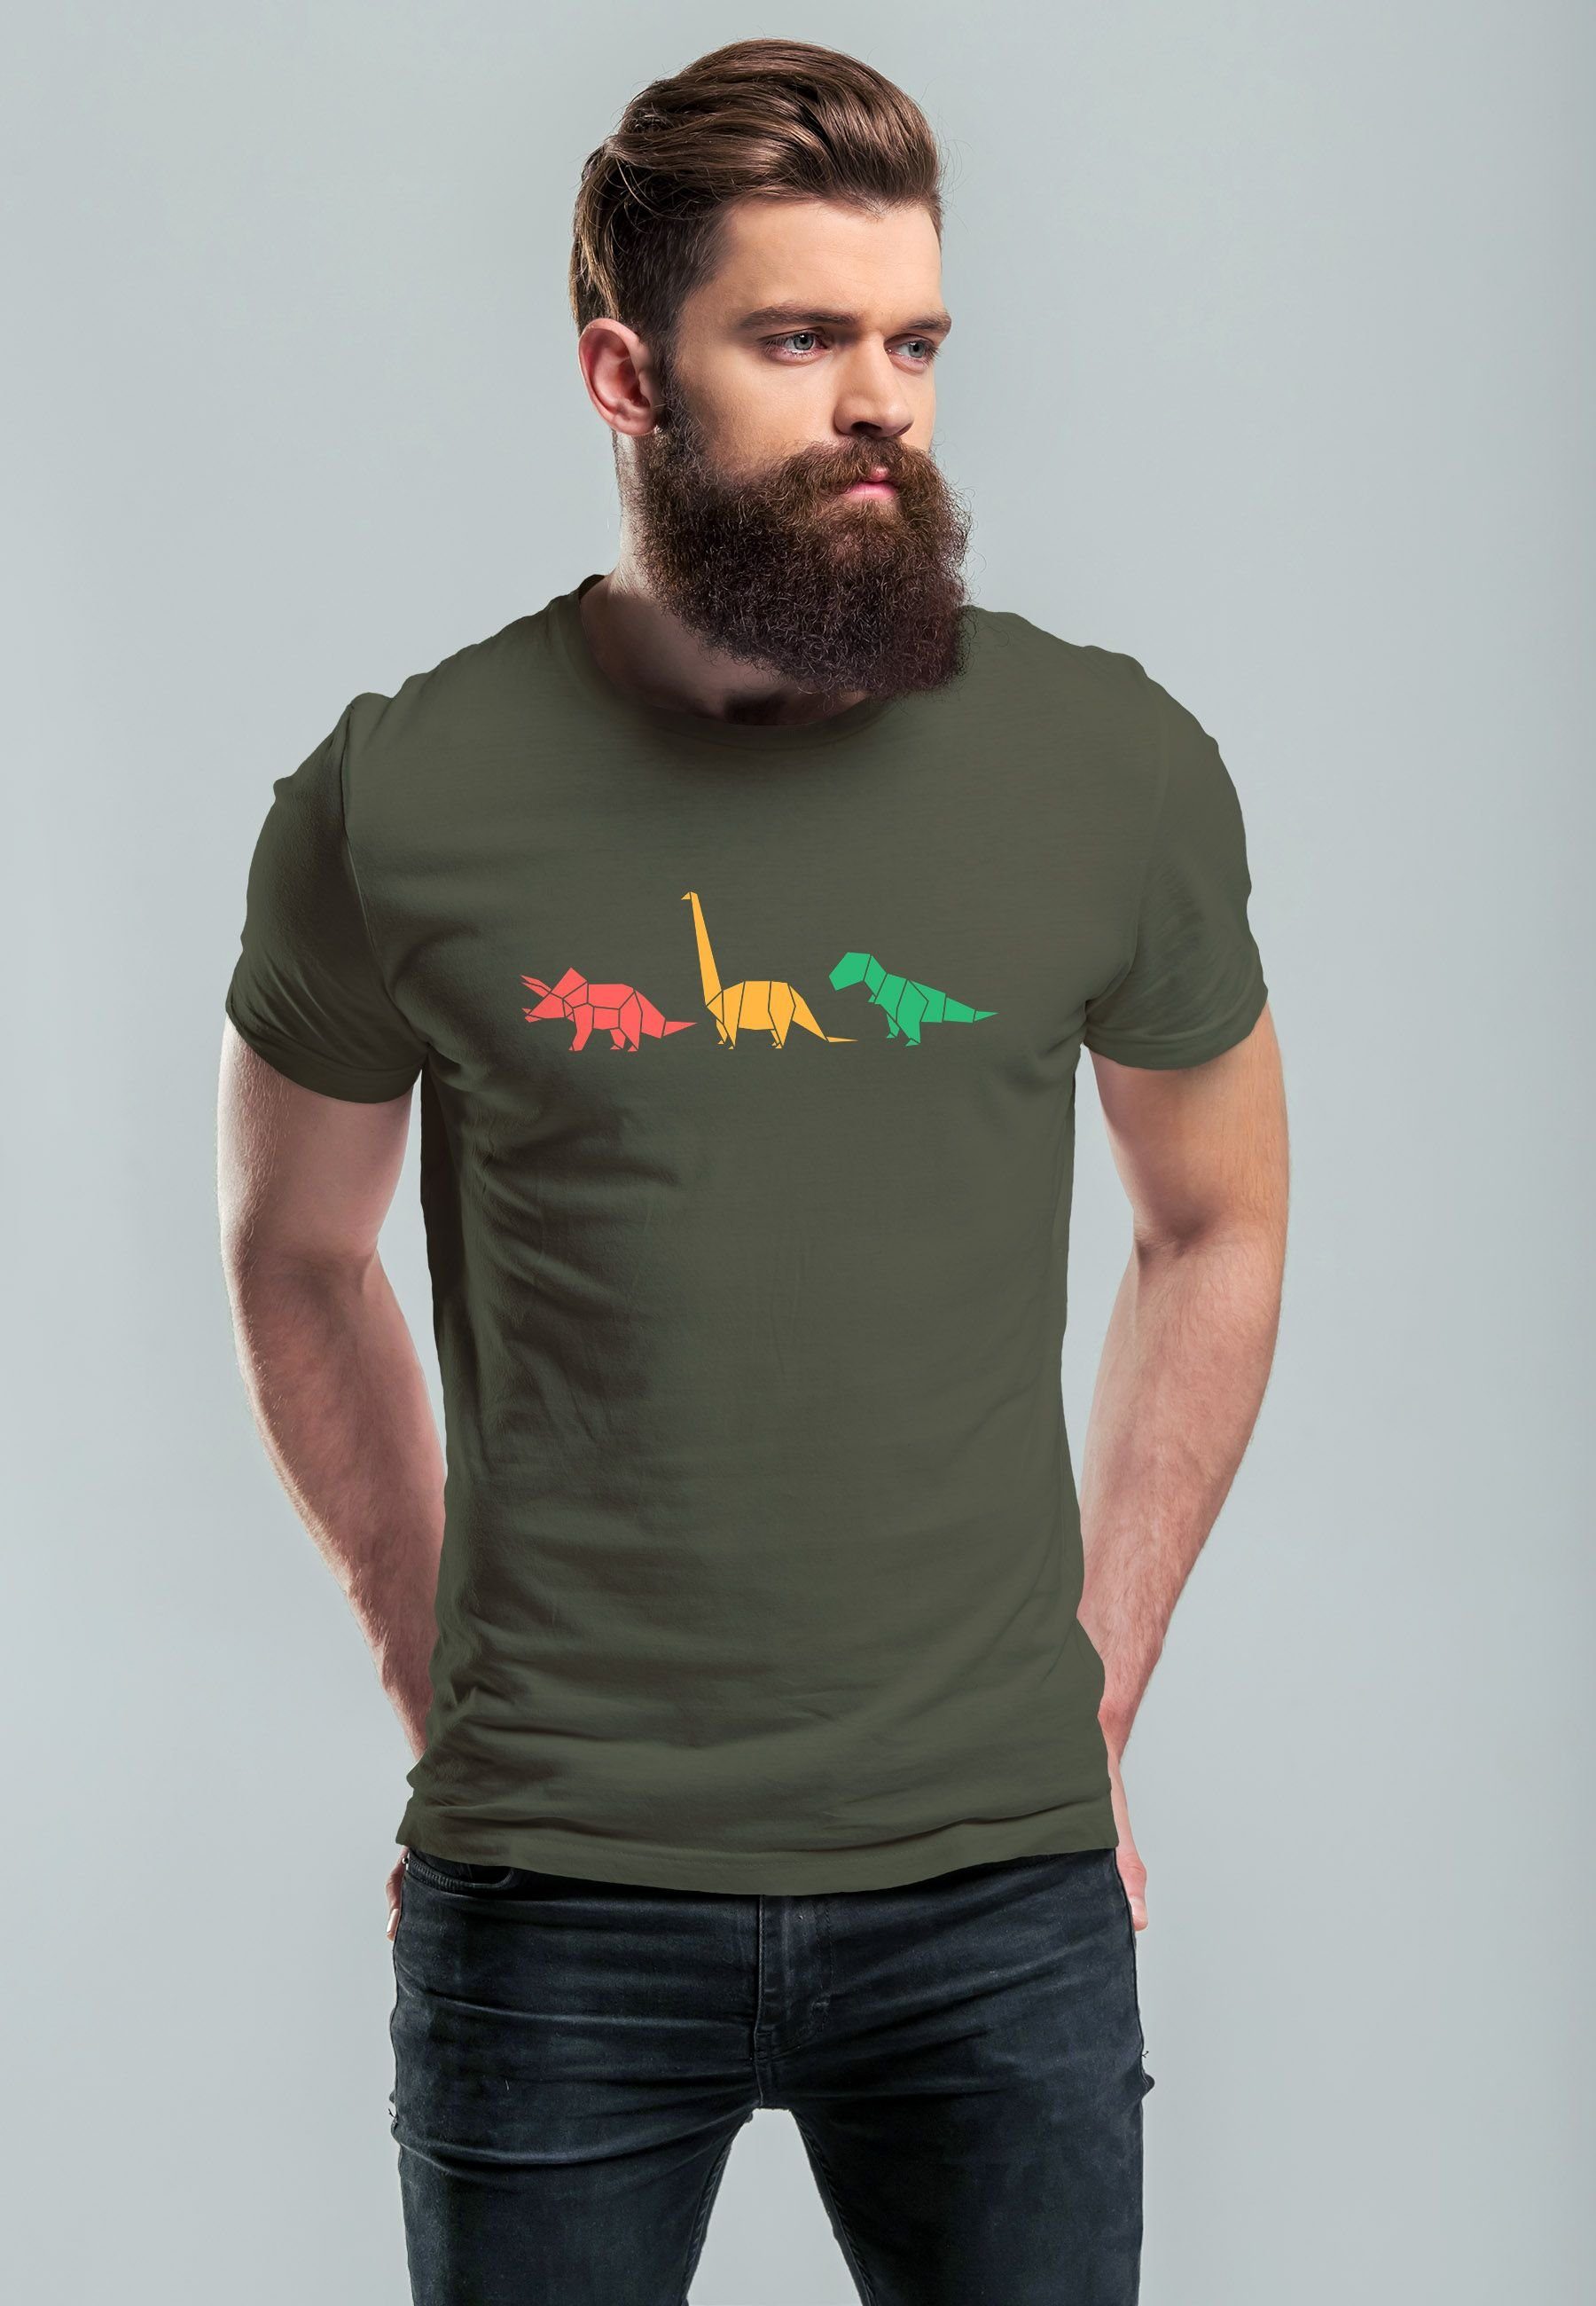 Fash army Neverless Print Polygon Geometric T-Shirt Print mit Print-Shirt Herren Tiere Dinosaurier Aufdruck